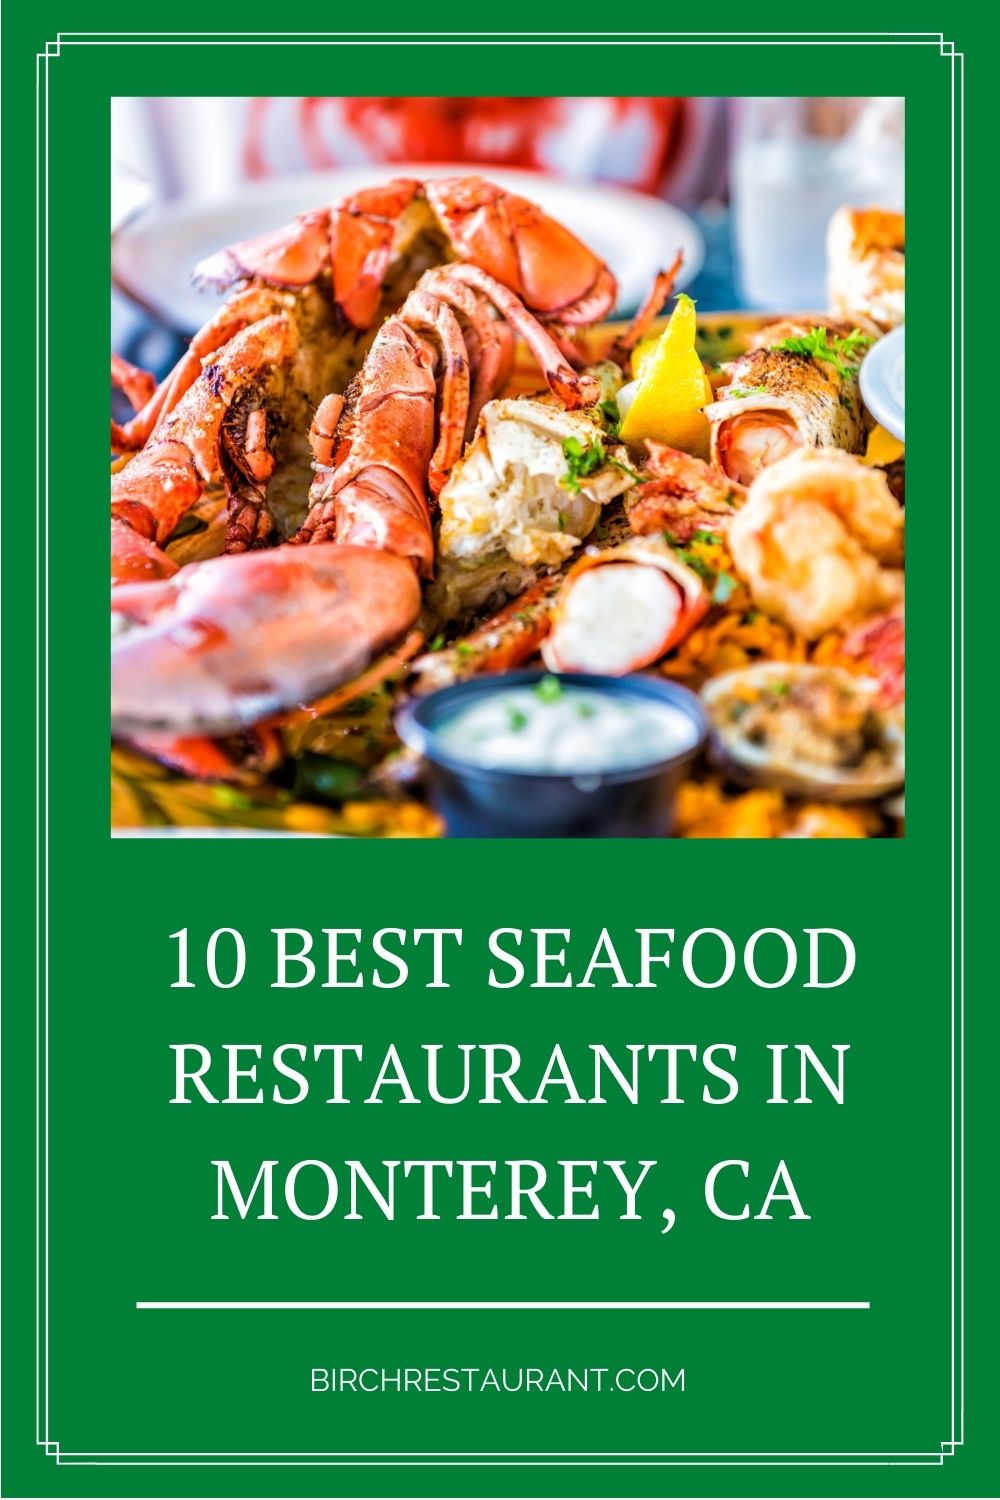 Best Seafood Restaurants in Monterey